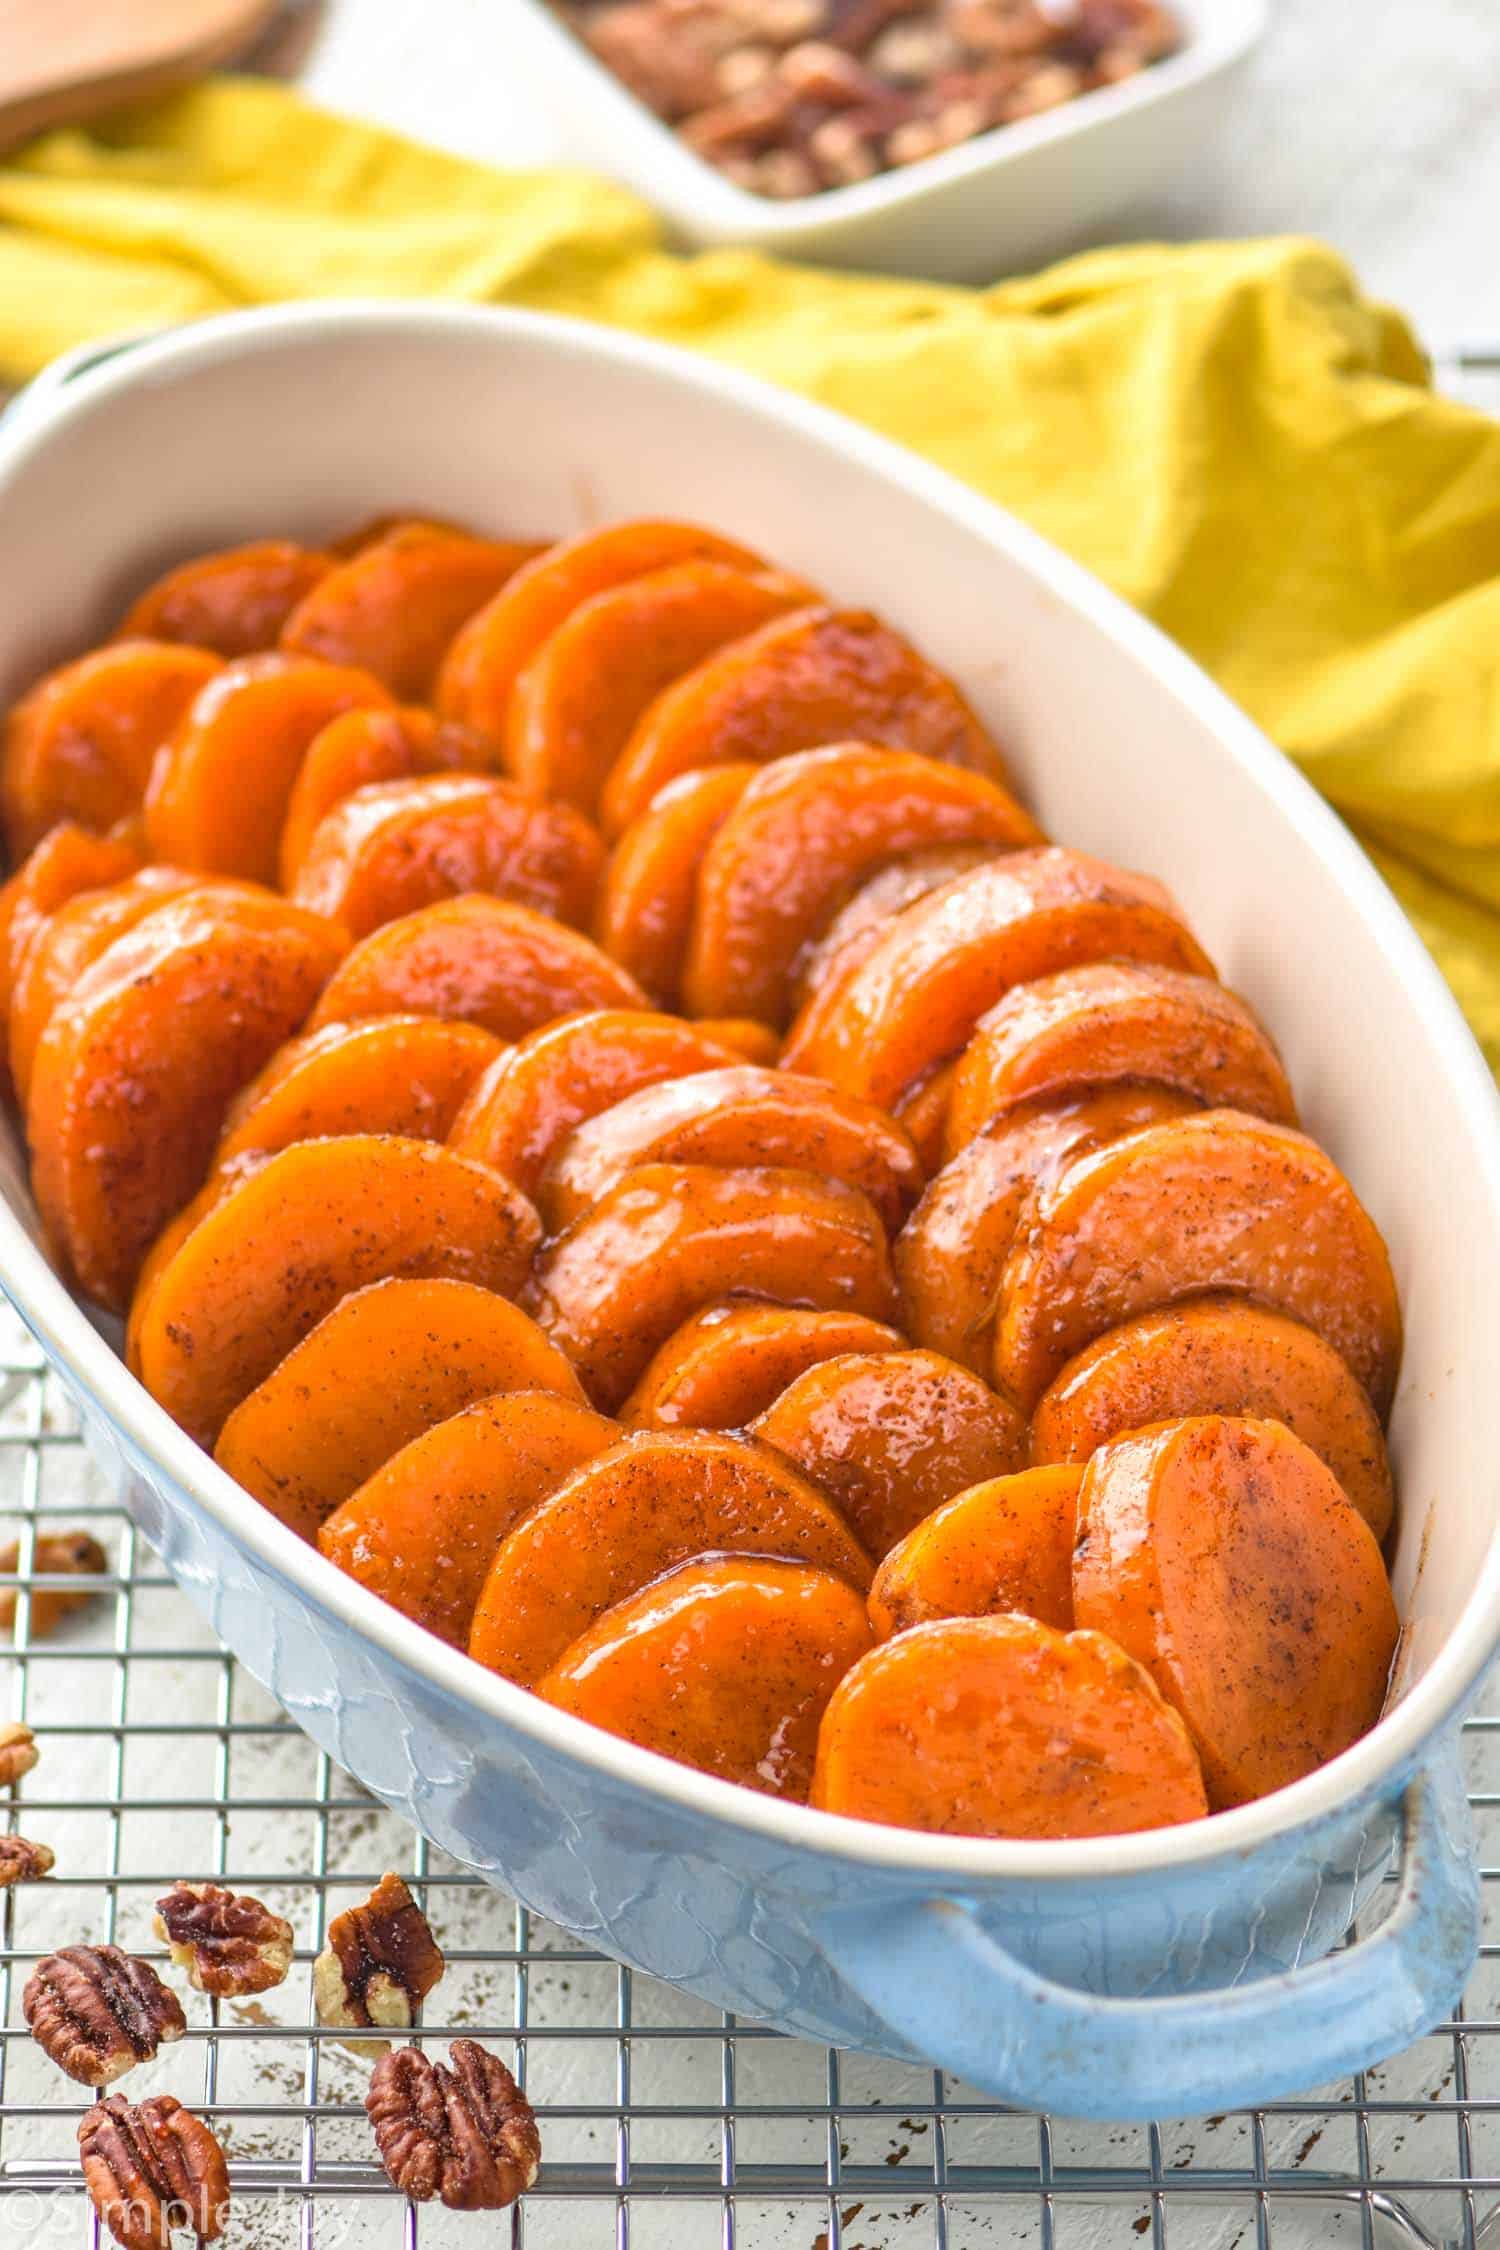 https://www.simplejoy.com/wp-content/uploads/2020/11/Candied-Sweet-Potatoes.jpg